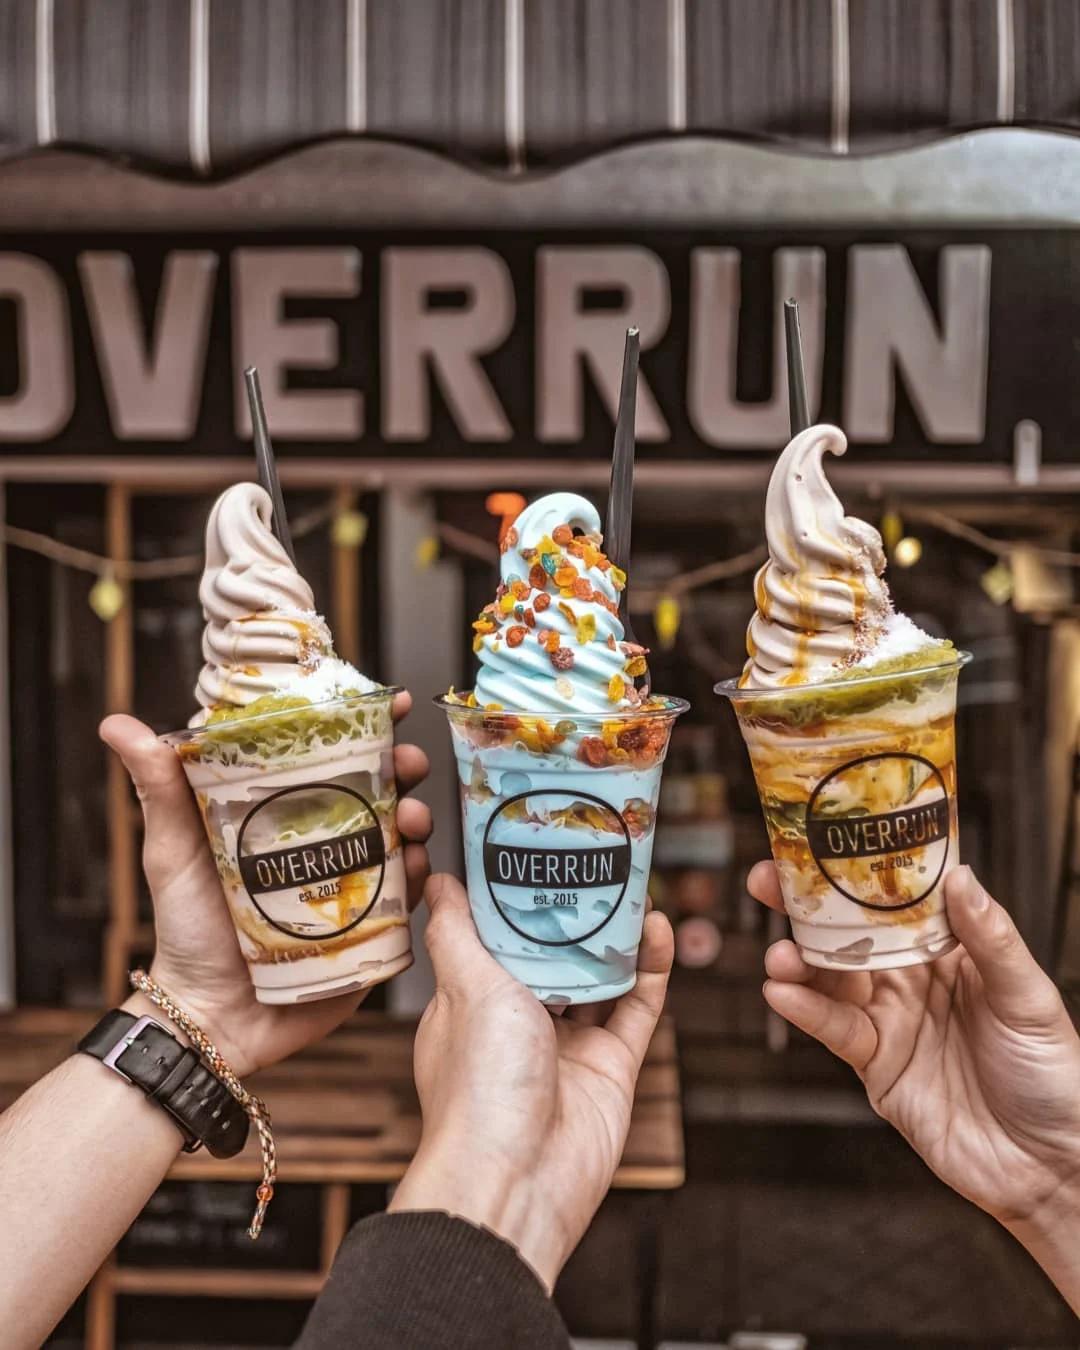 Ice-creams from Overrun